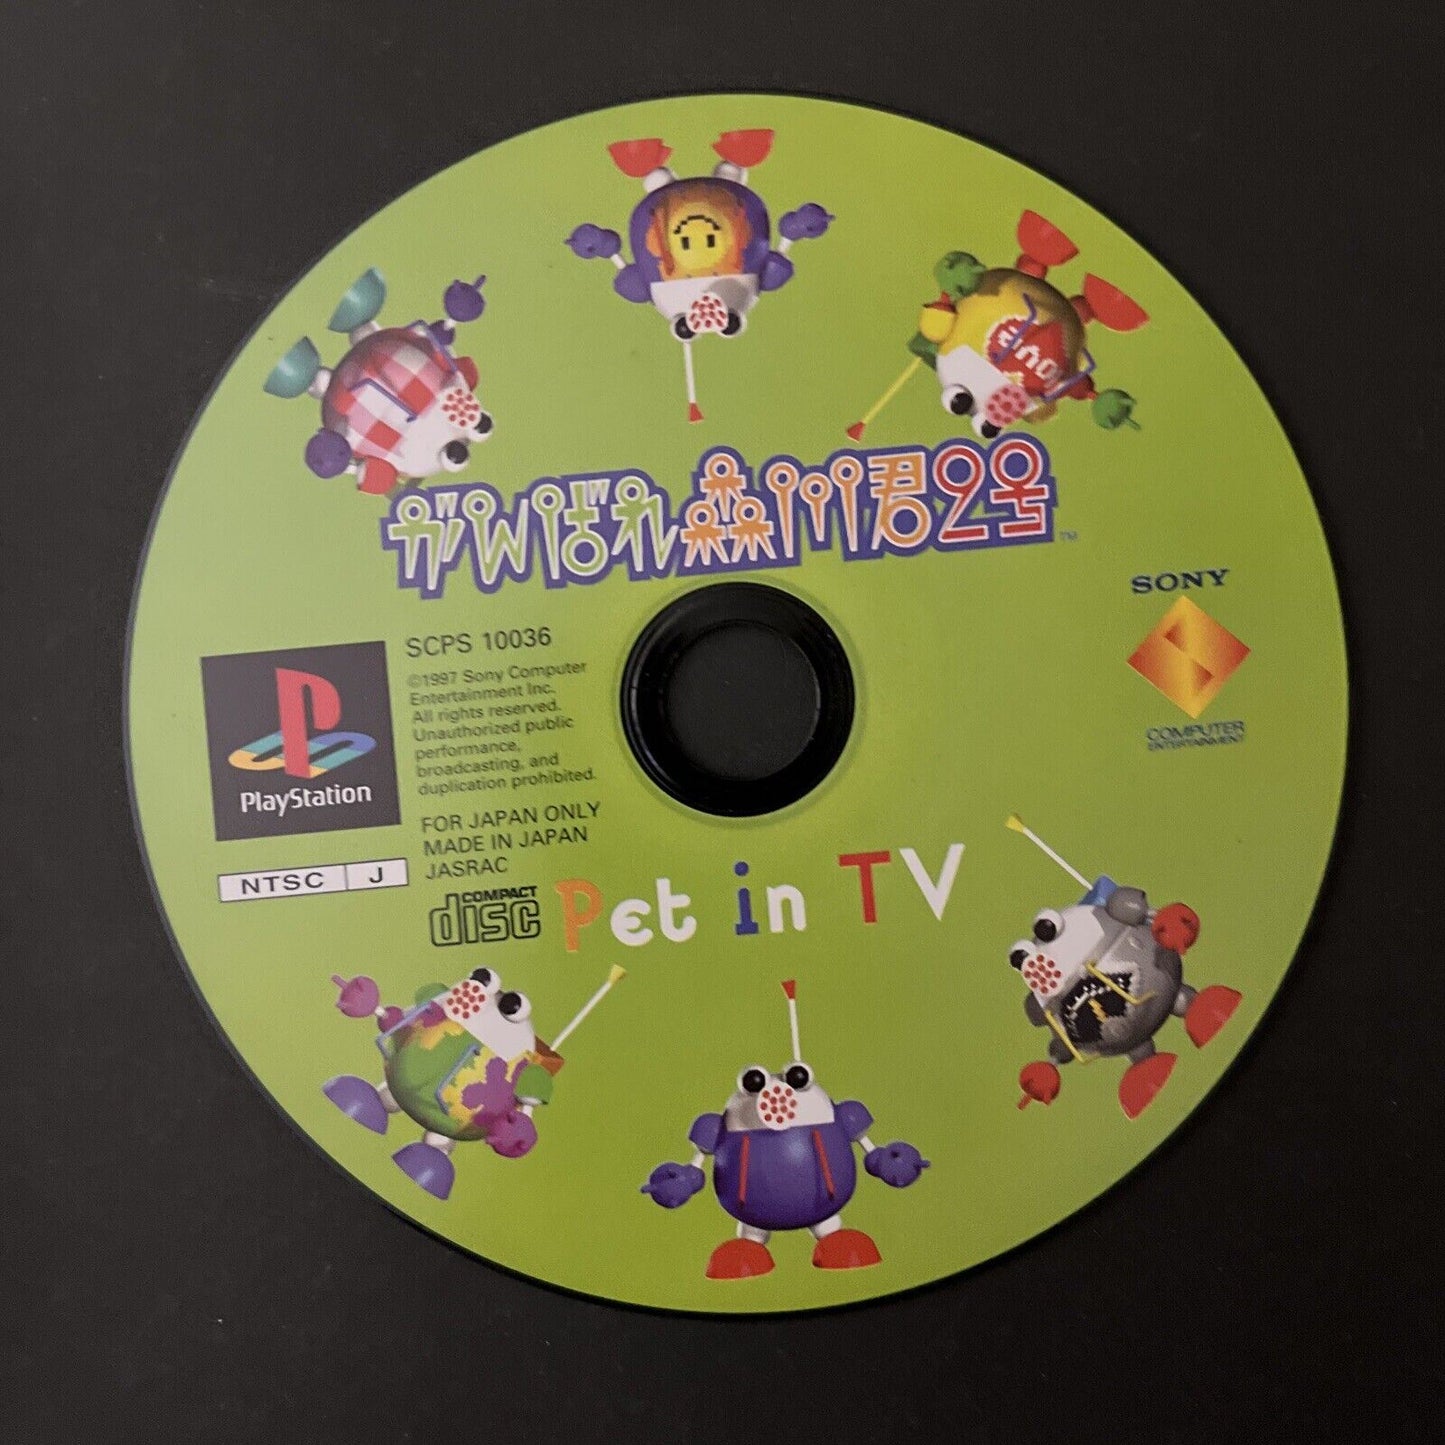 Ganbare Morikawa-kun 2nd Pet in TV - Sony PlayStation PS1 NTSC-J JAPAN 1997 Game